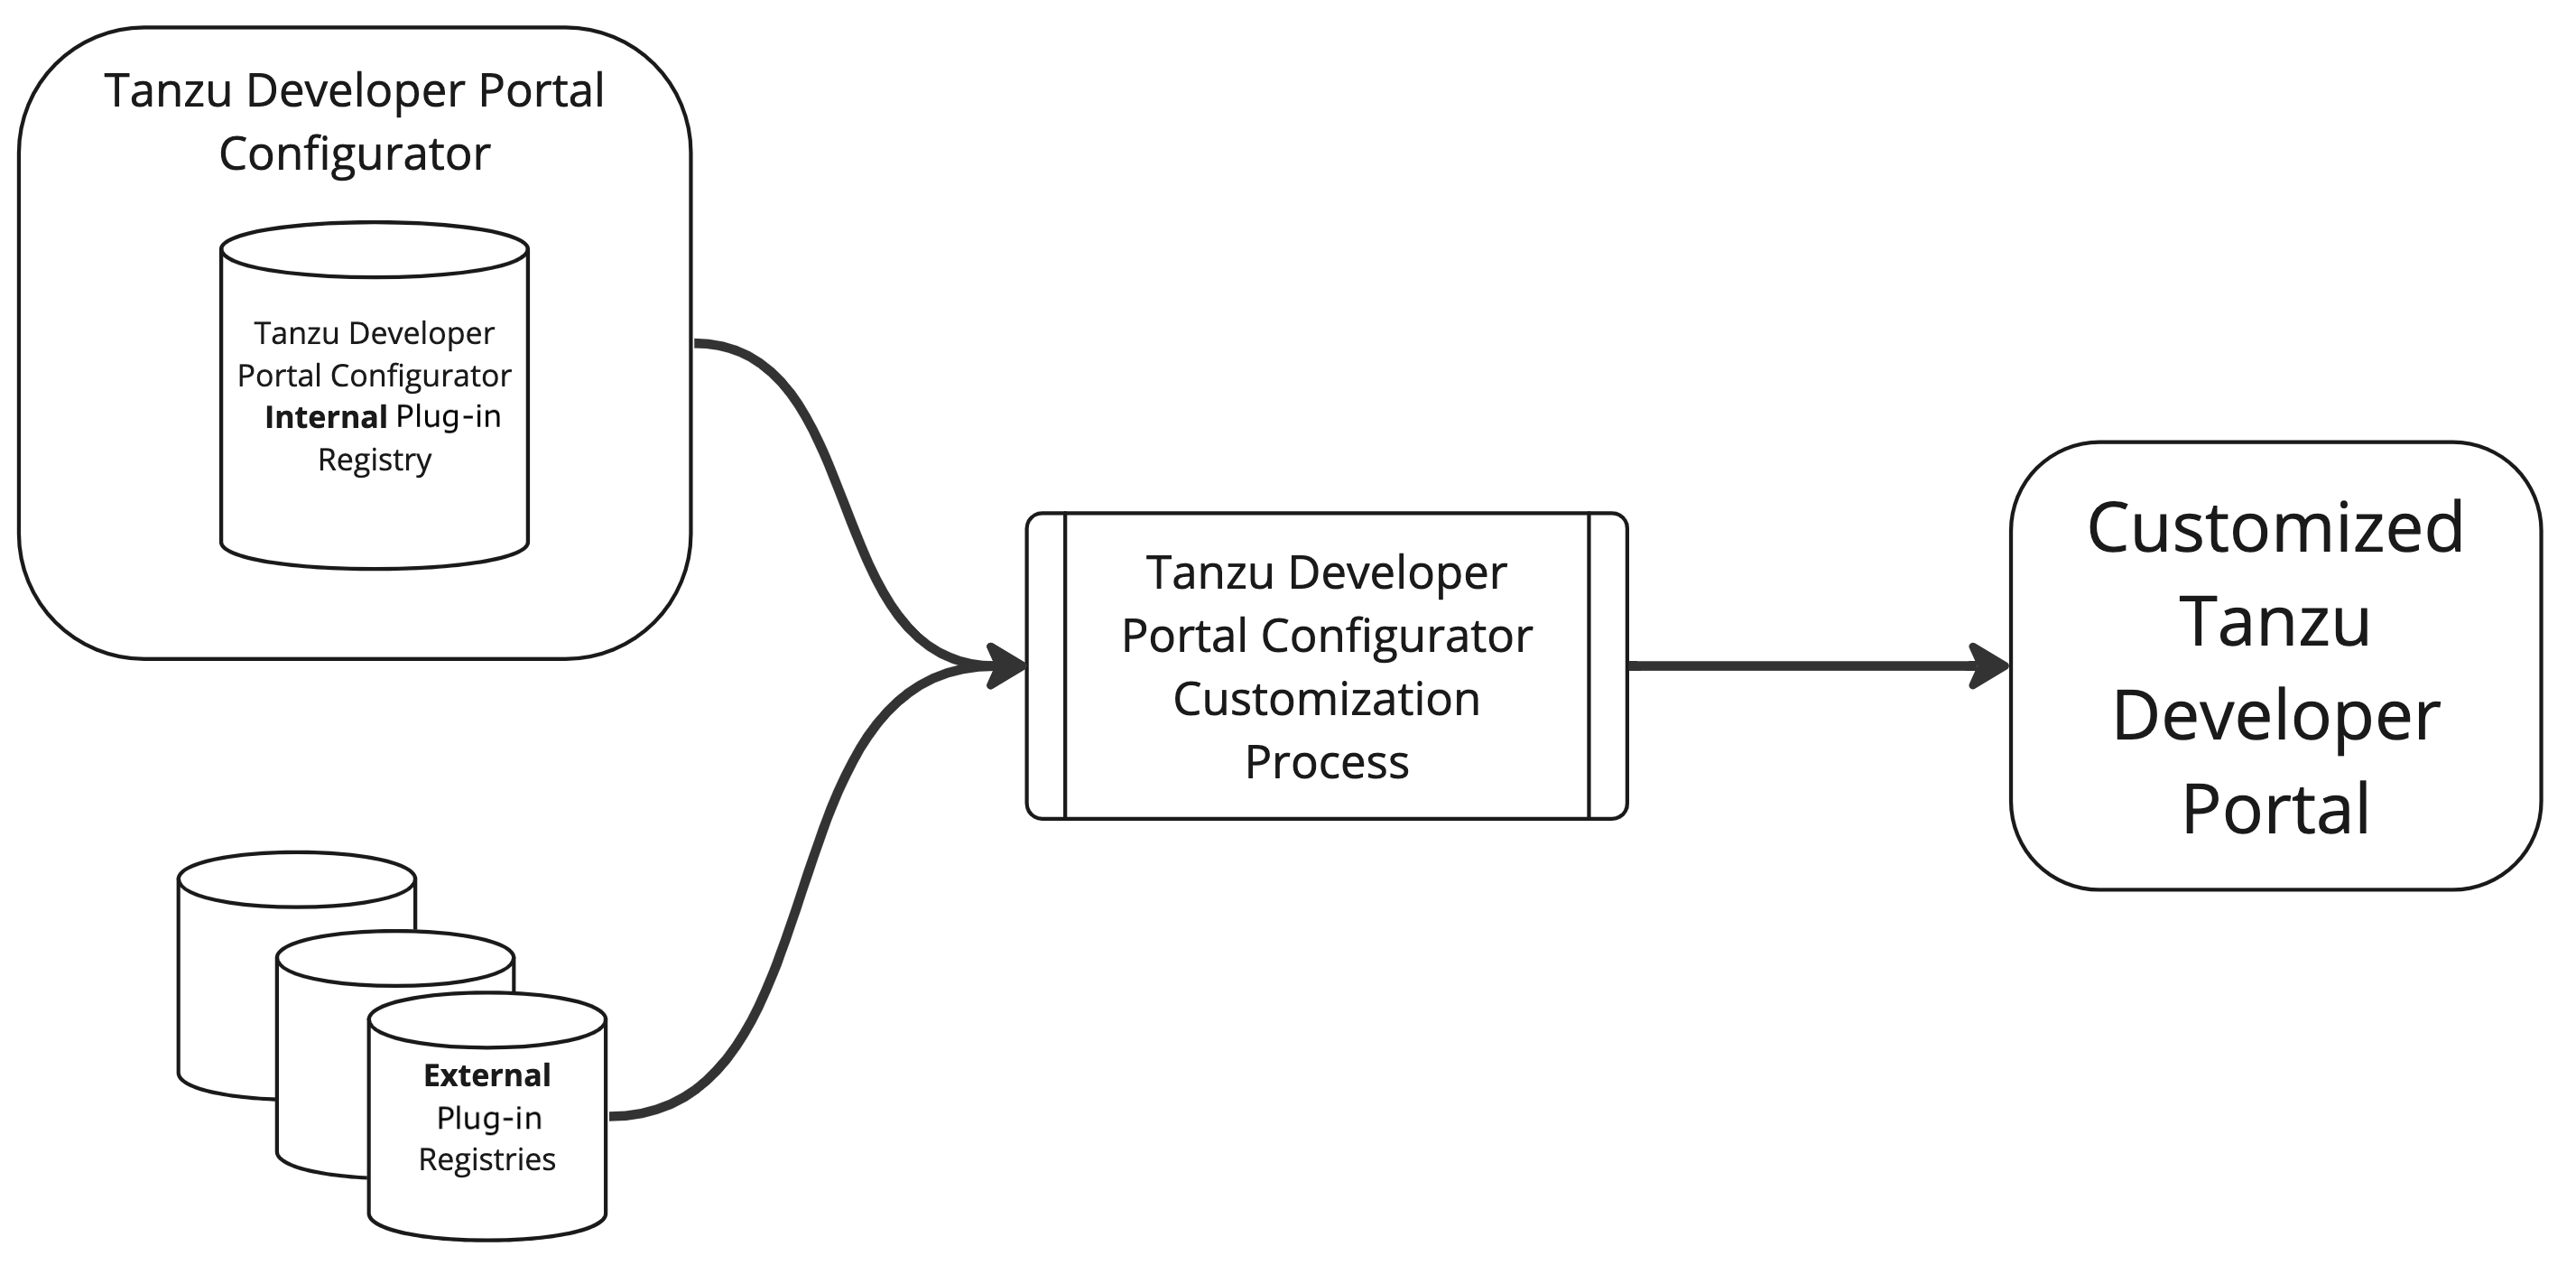 Diagram of Tanzu Developer Portal Configurator, the included internal plug-in registry, and the customization process.